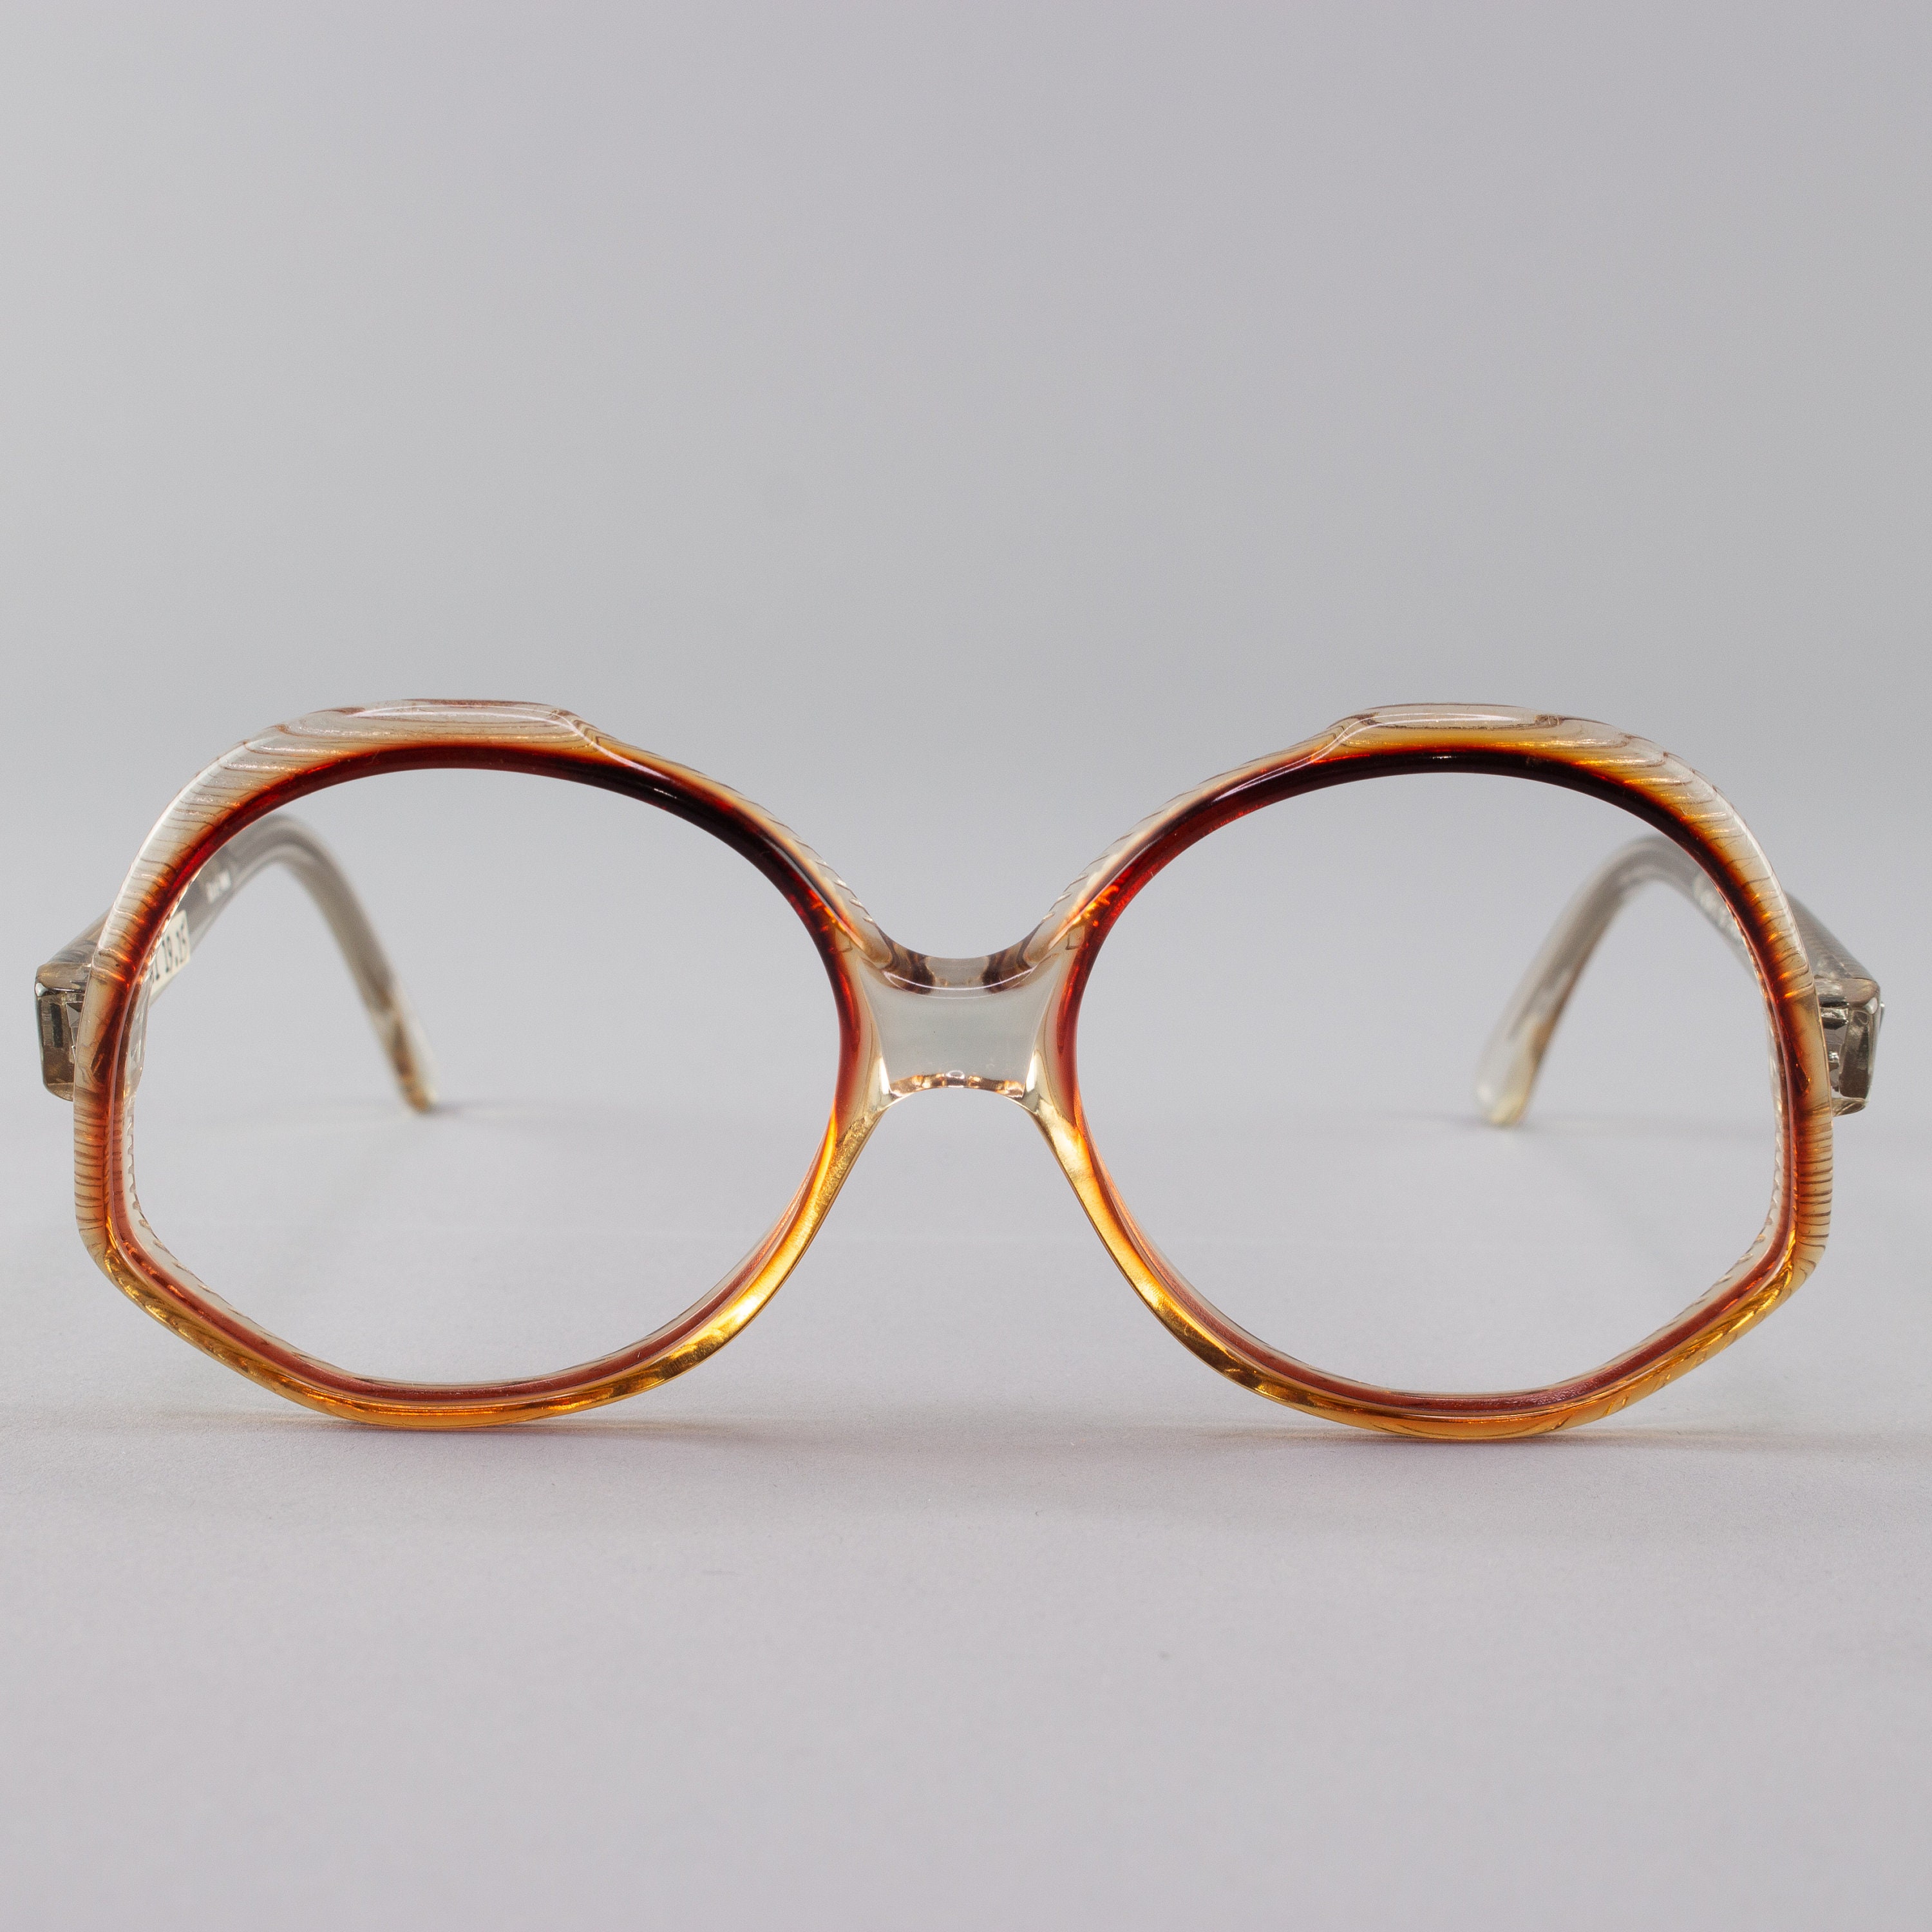 Vintage EyeglassesOversized 70s Glasses1970s Aesthetic Eyeglass Frame 